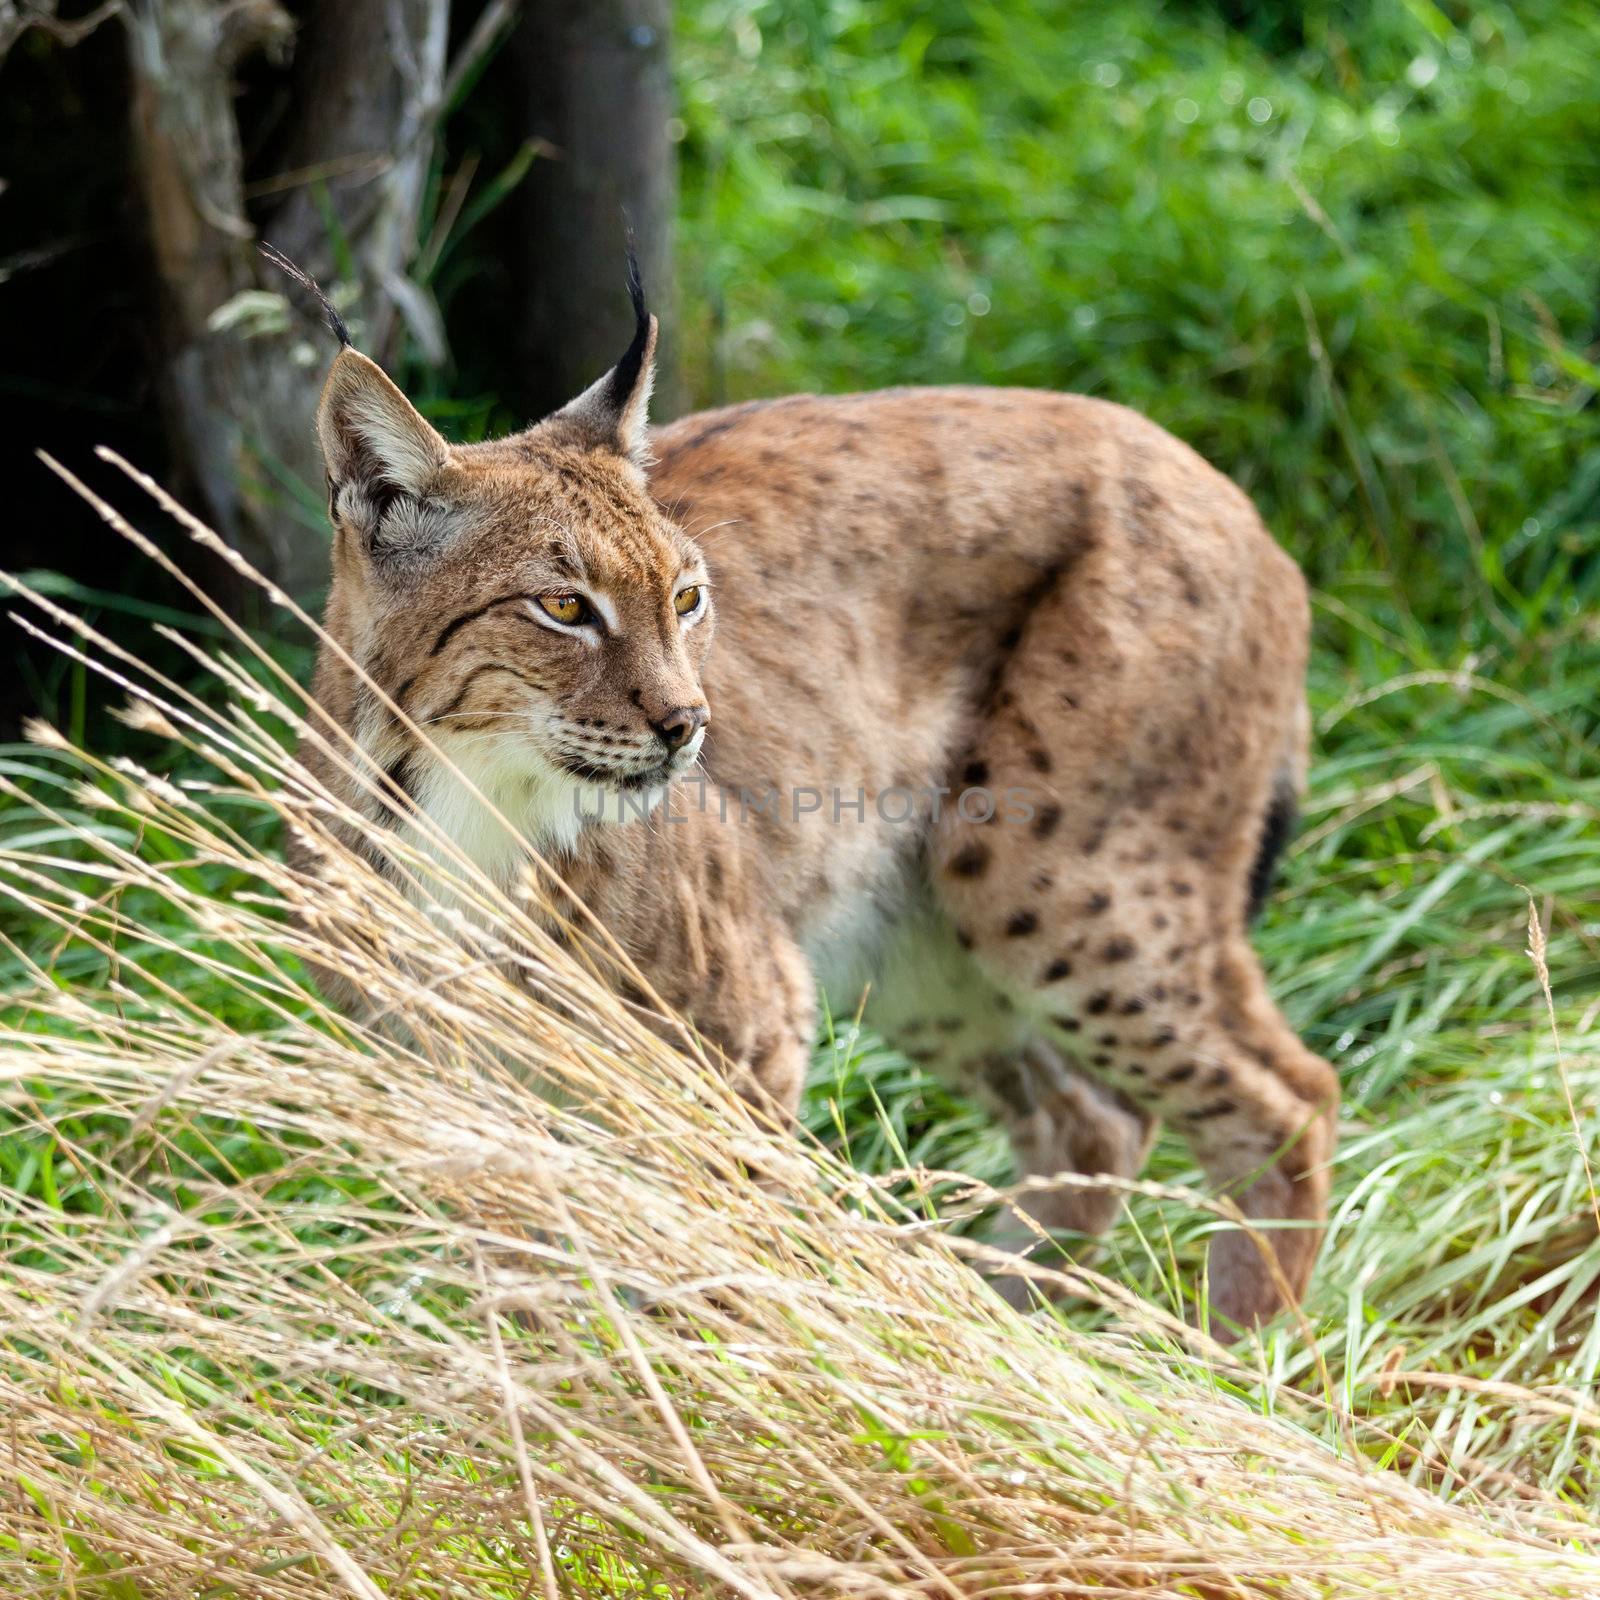 Eurasian Lynx Prowling through Long Grass by scheriton